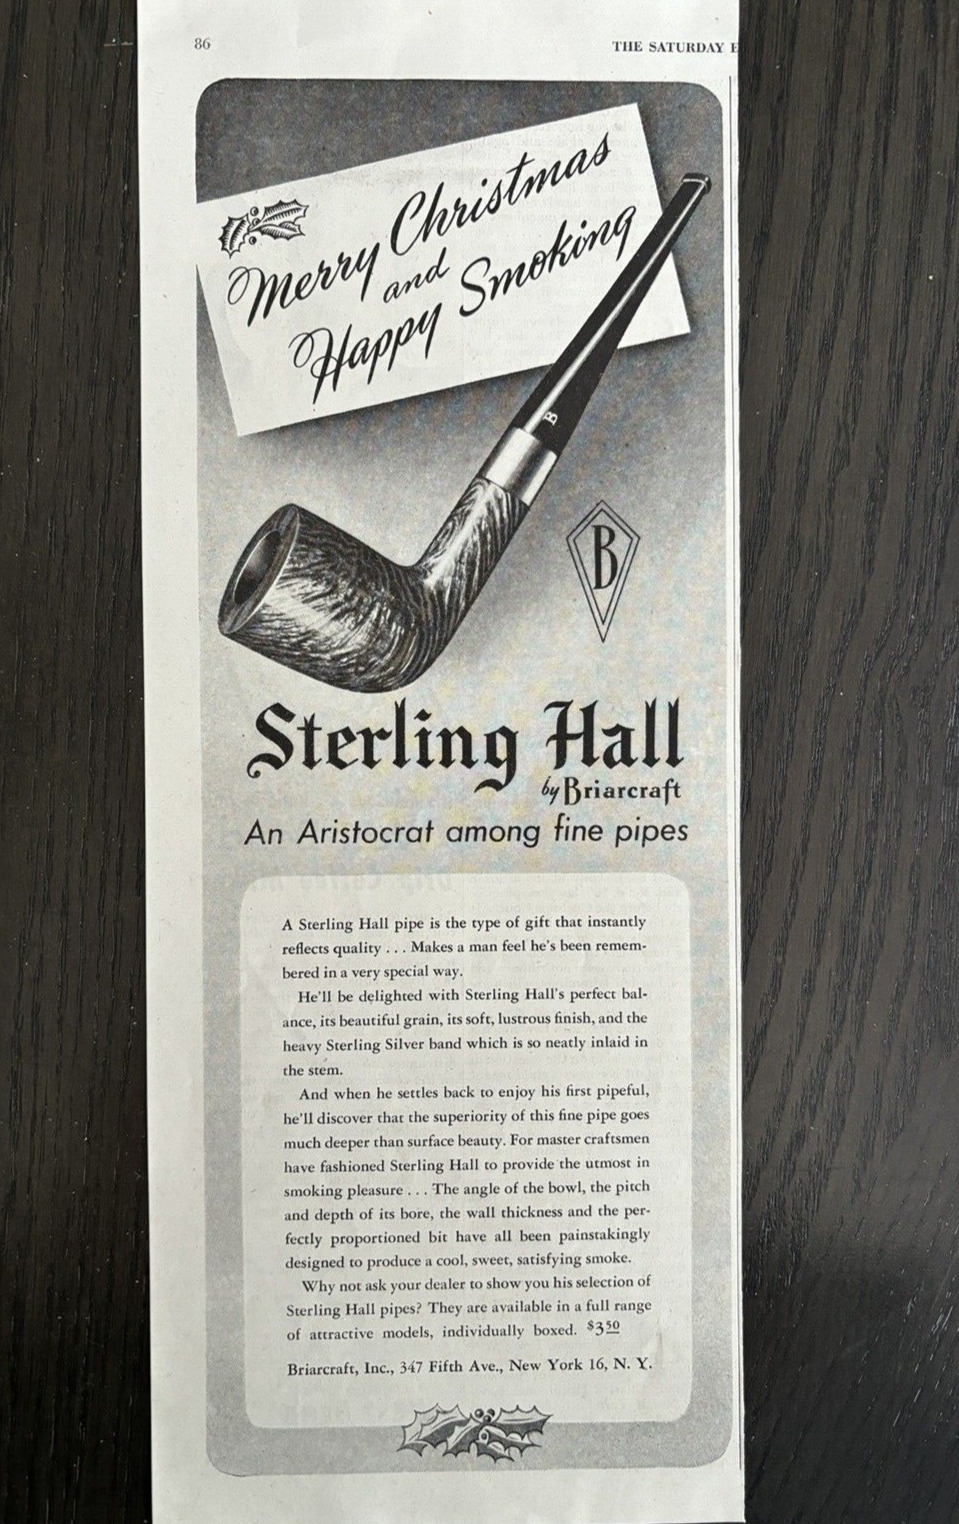 Briarcraft Pipes Sterling Hall Aristocrat Happy Smoking Vintage Print ad 1945